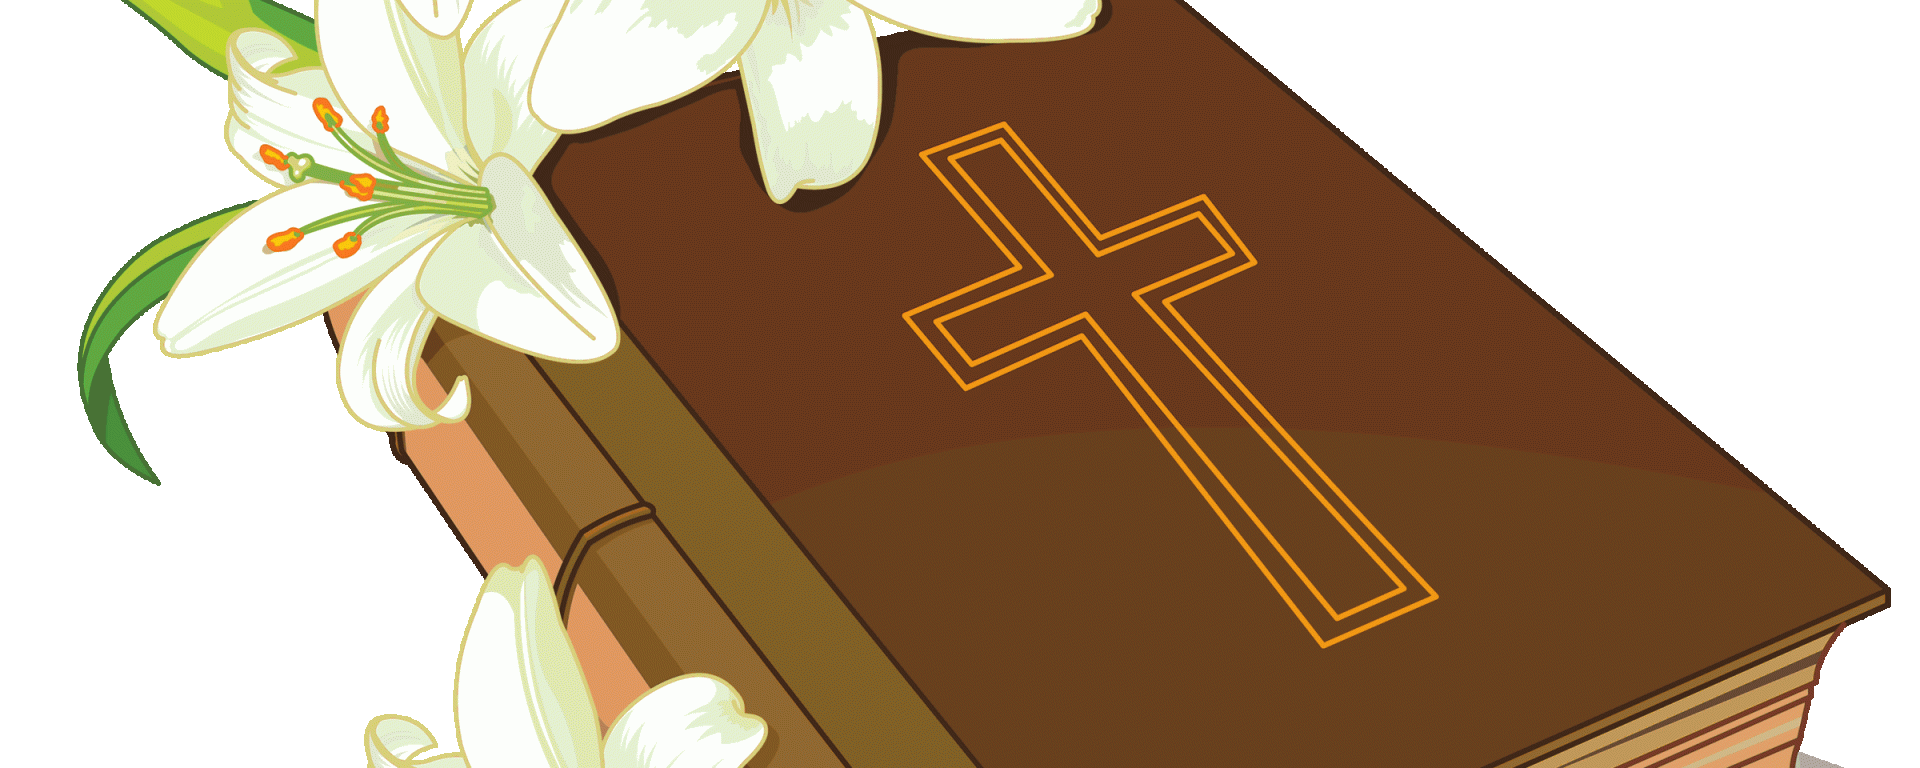 flowers clipart bible